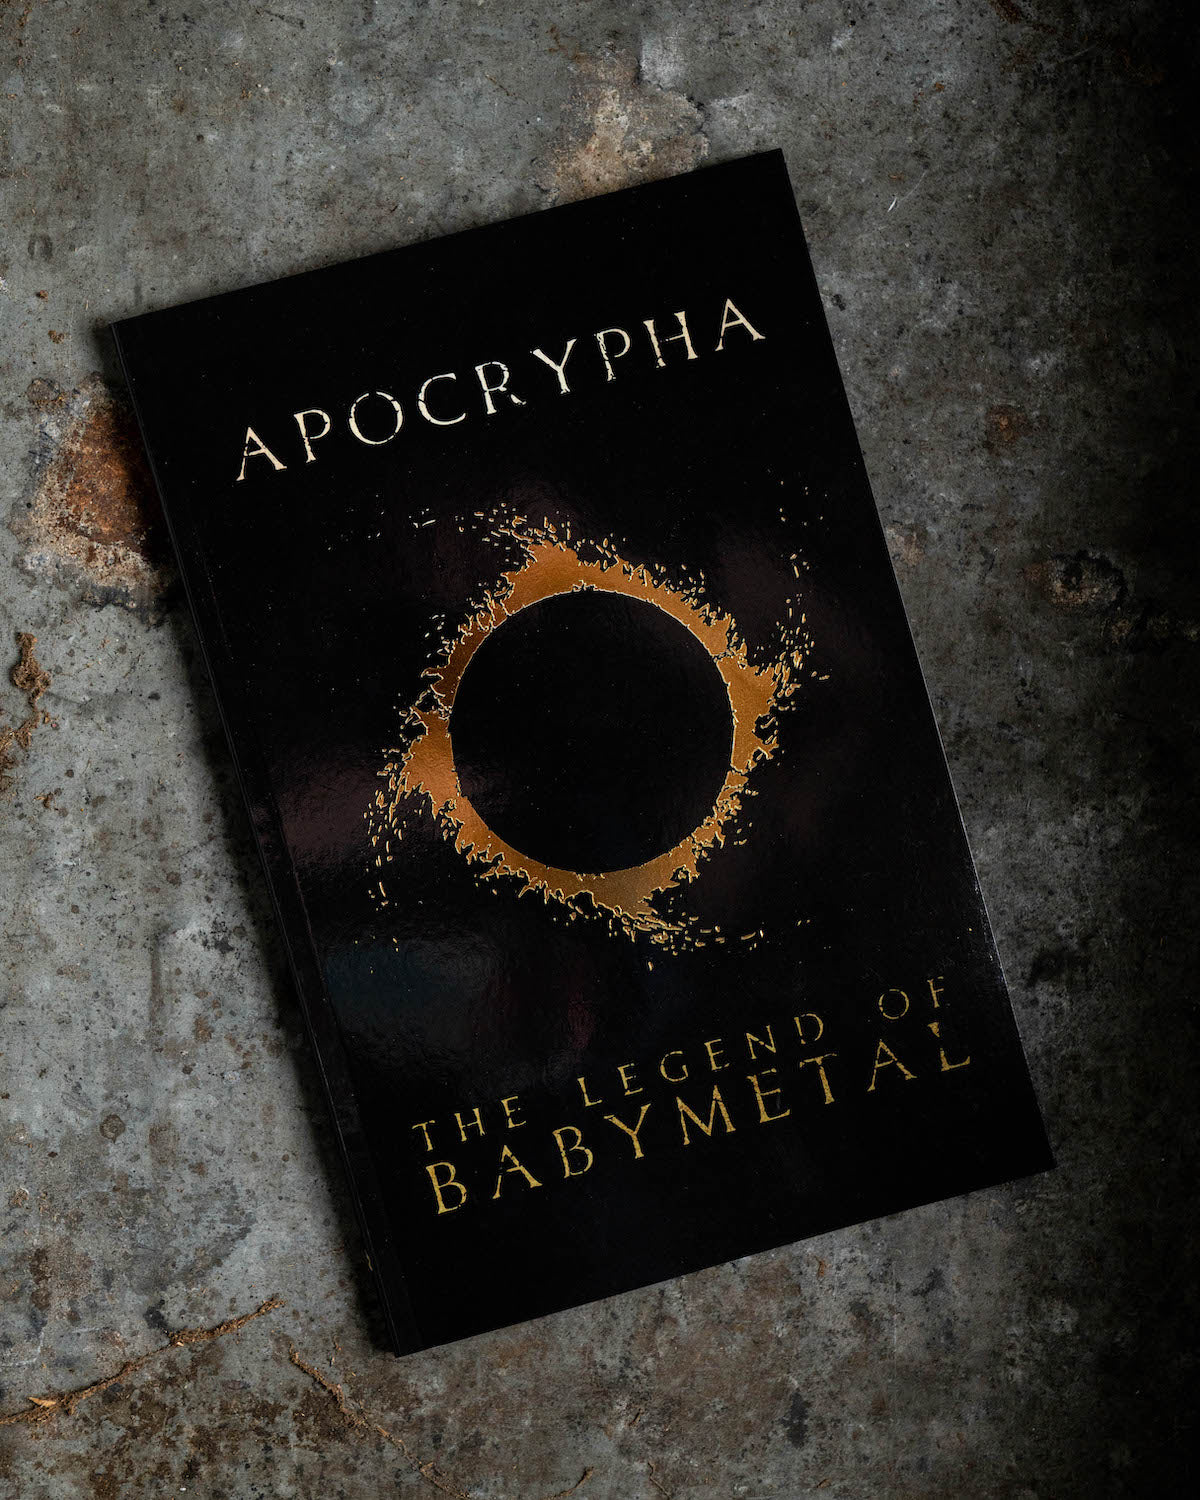 BABYMETAL - Apocrypha: The Legend of BABYMETAL